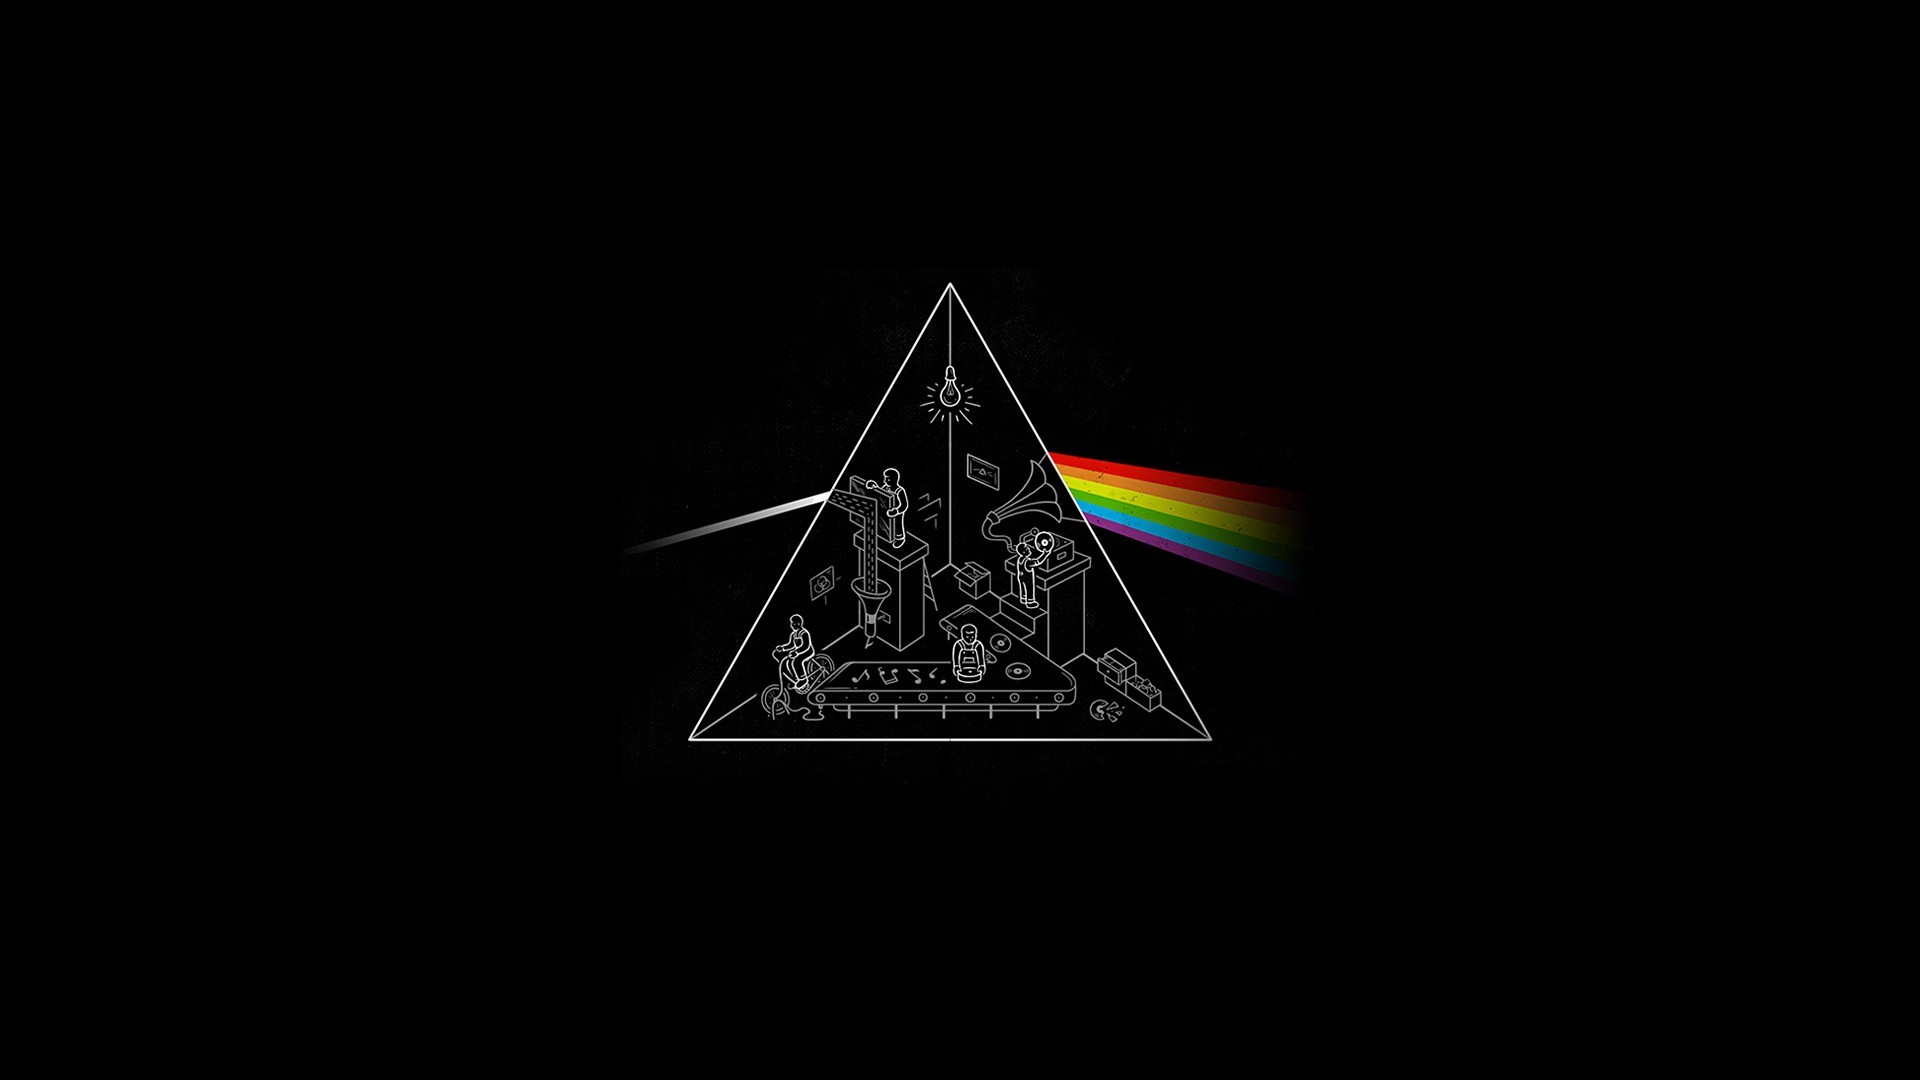 1920x1080 Pink Floyd hard rock classic retro bands groups album covers logo wallpaper  |  | 26105 | WallpaperUP